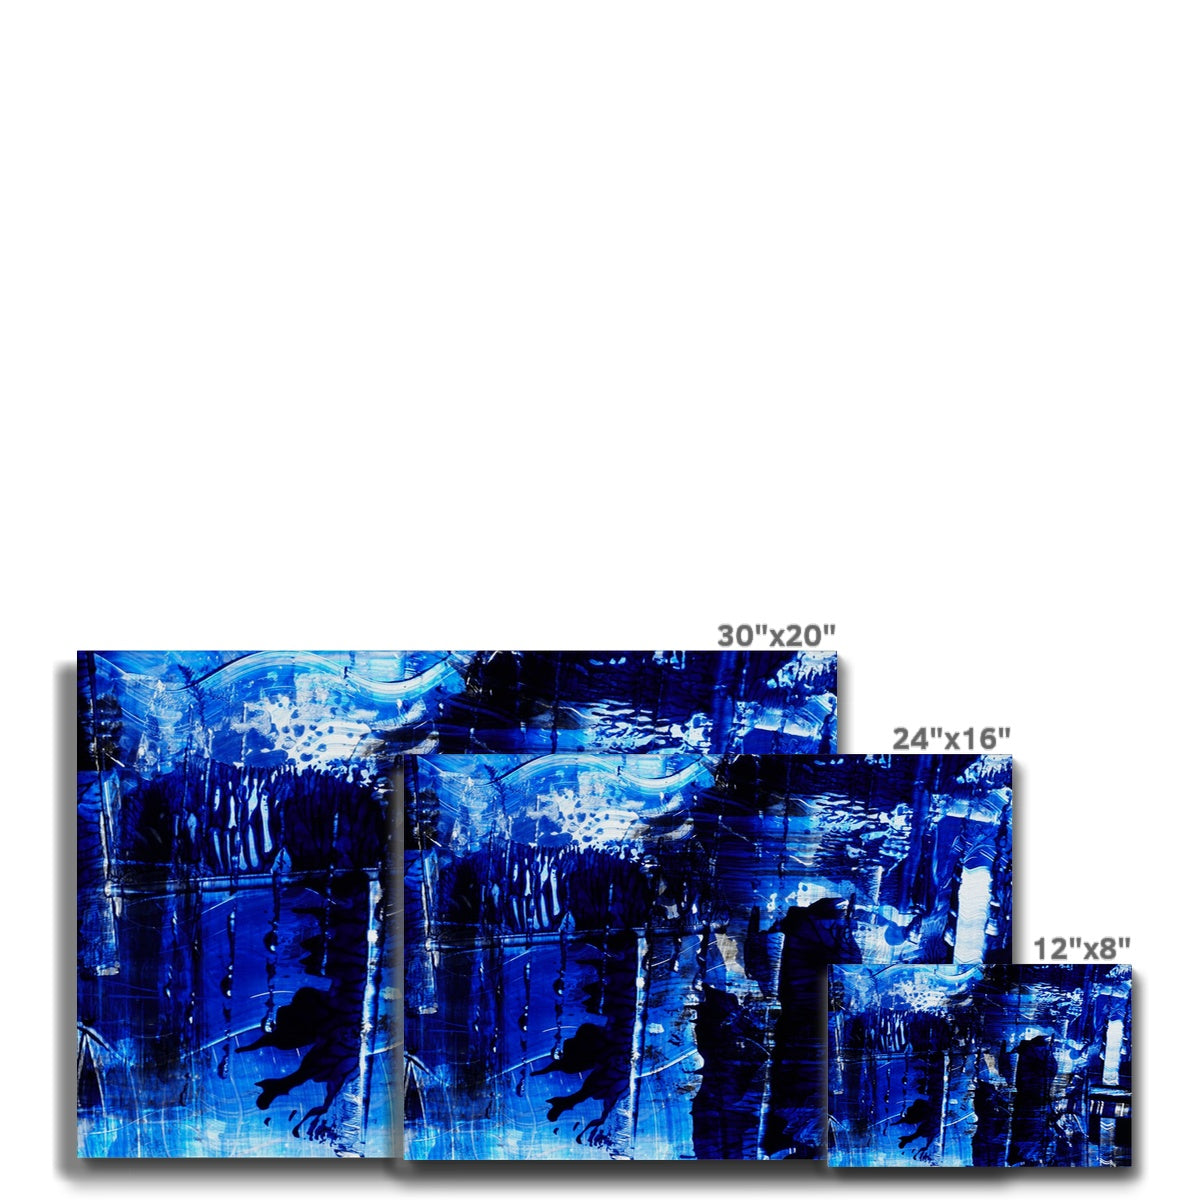 Dark Blue Expressive Abstract Canvas